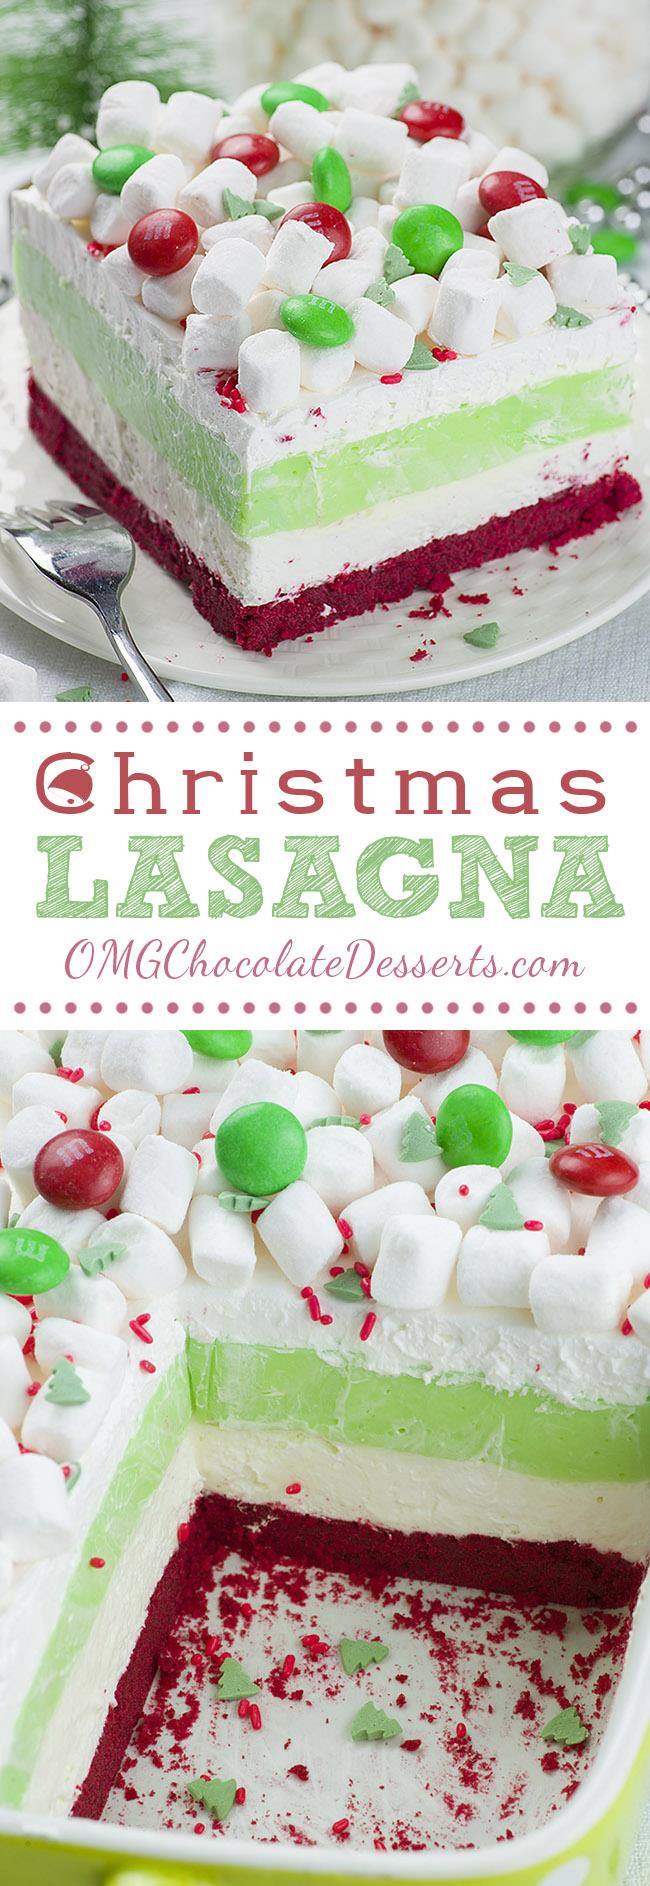 Christmas Lasagna | Layered Christmas Dessert Recipe With ...